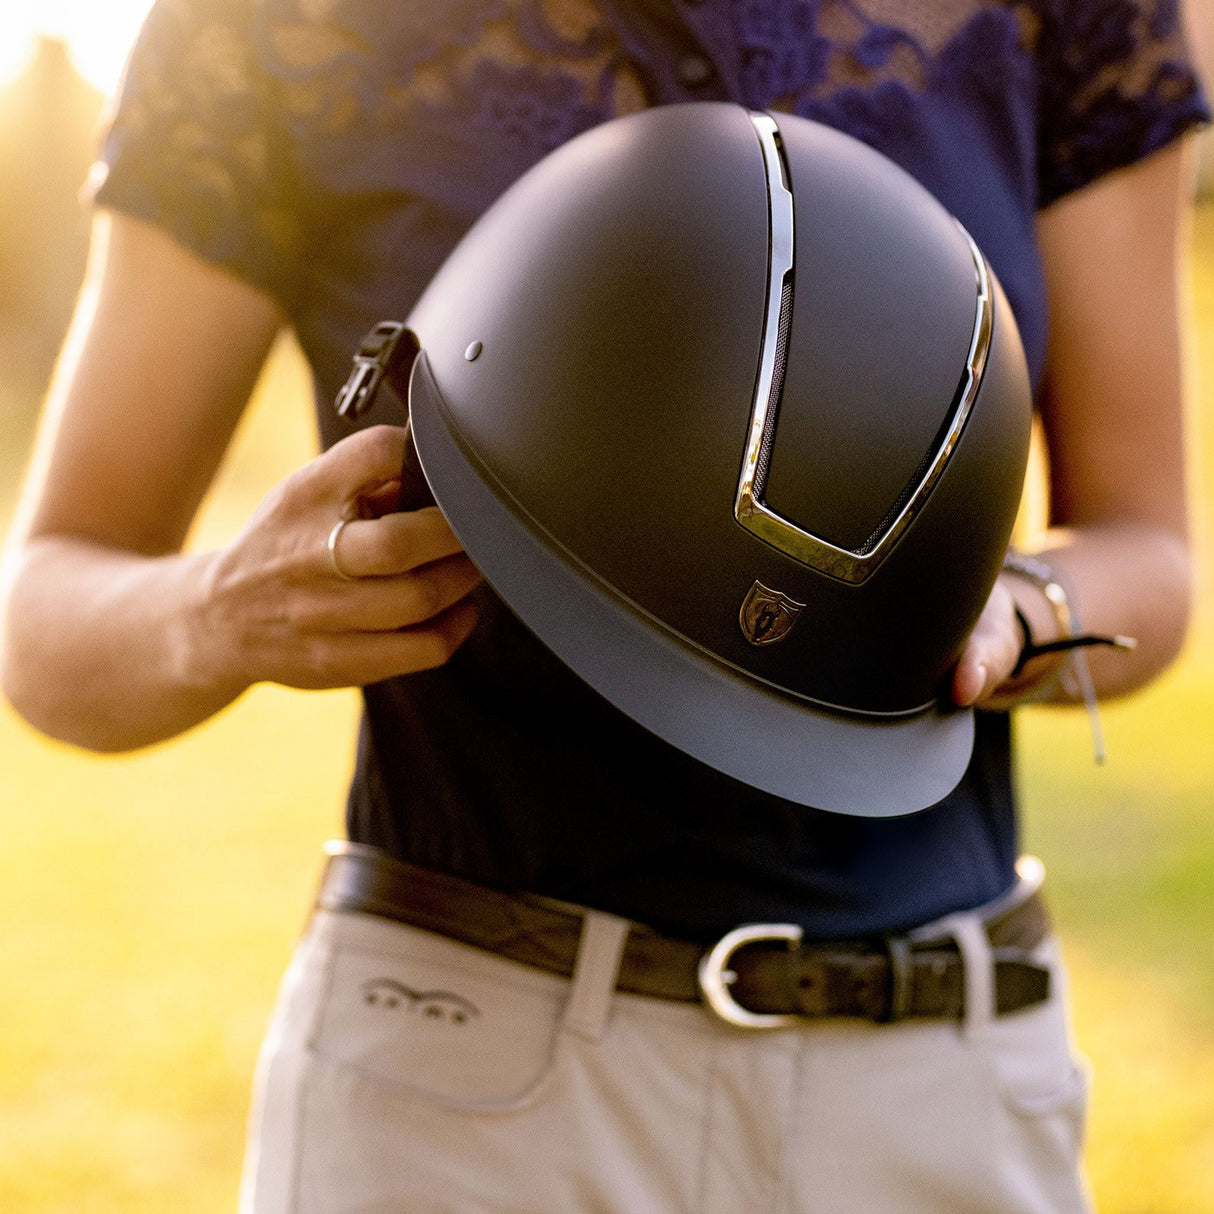 Tipperary Windsor Wide Brim MIPS Helmet - Smoked Chrome Trim